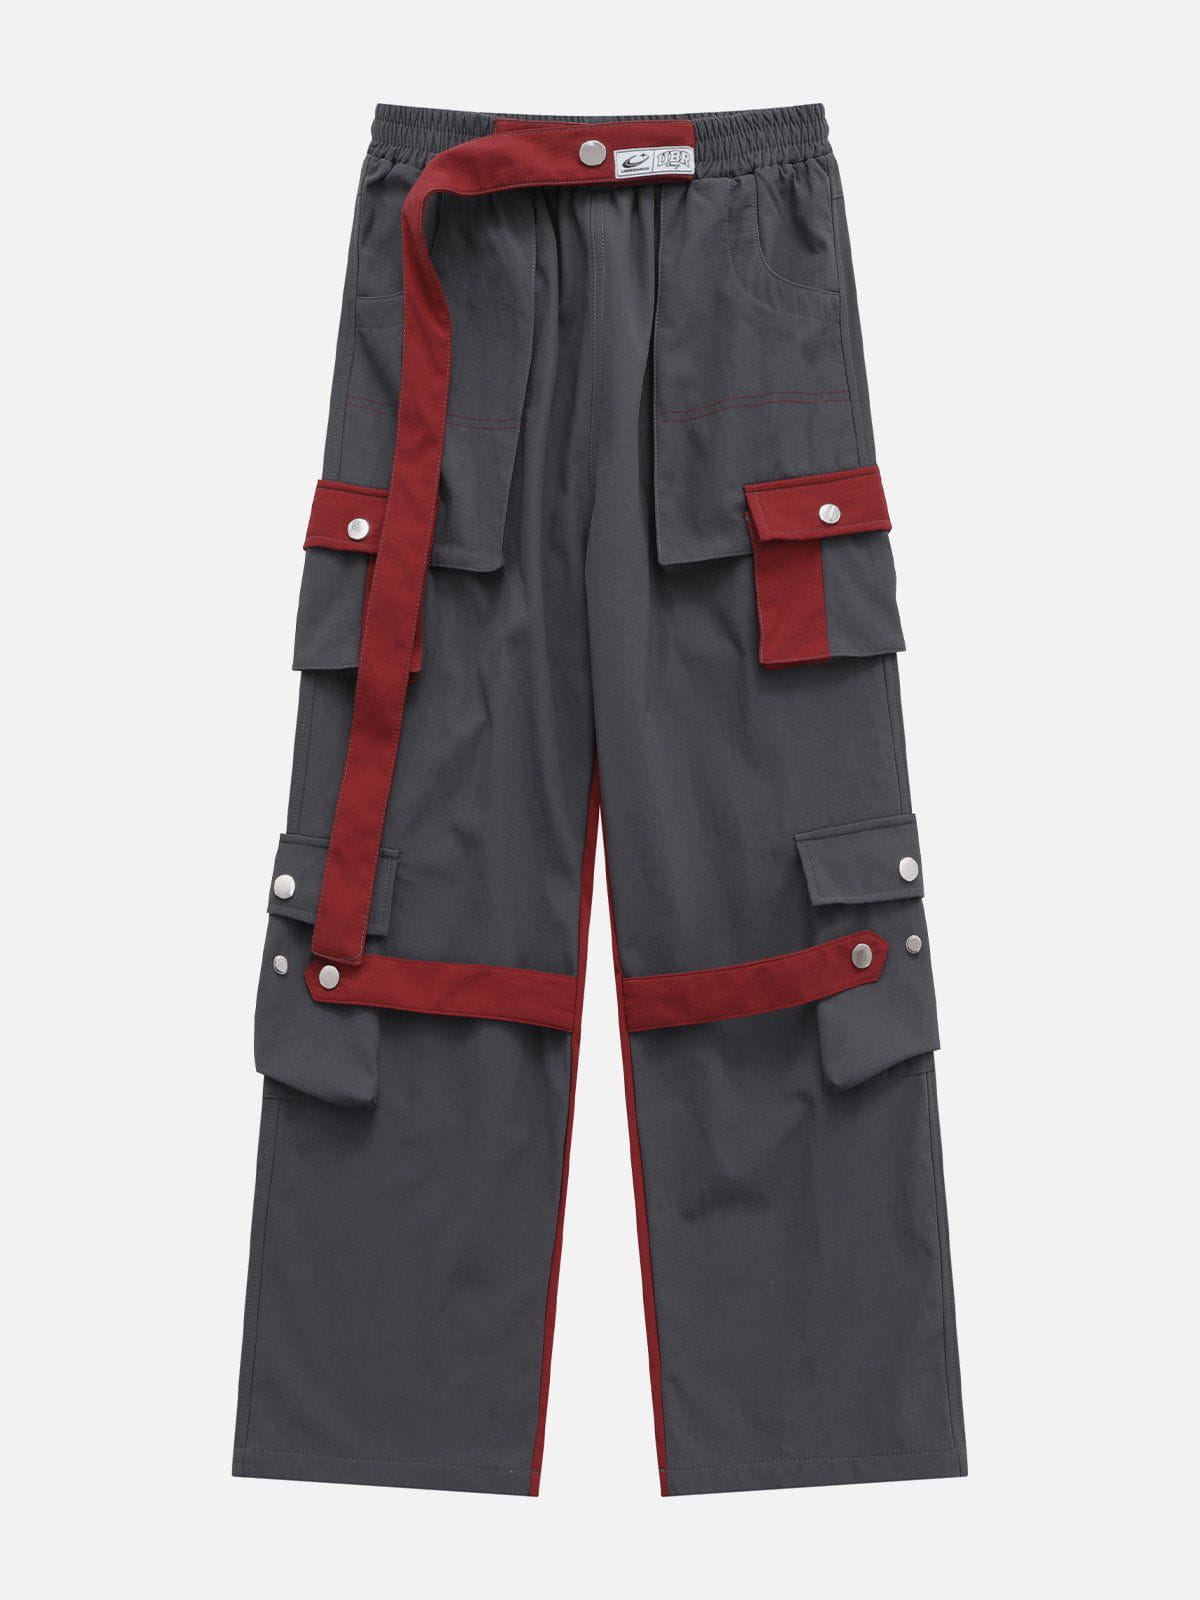 Majesda® - Contrast Multi-Pocket Cargo Pants outfit ideas streetwear fashion